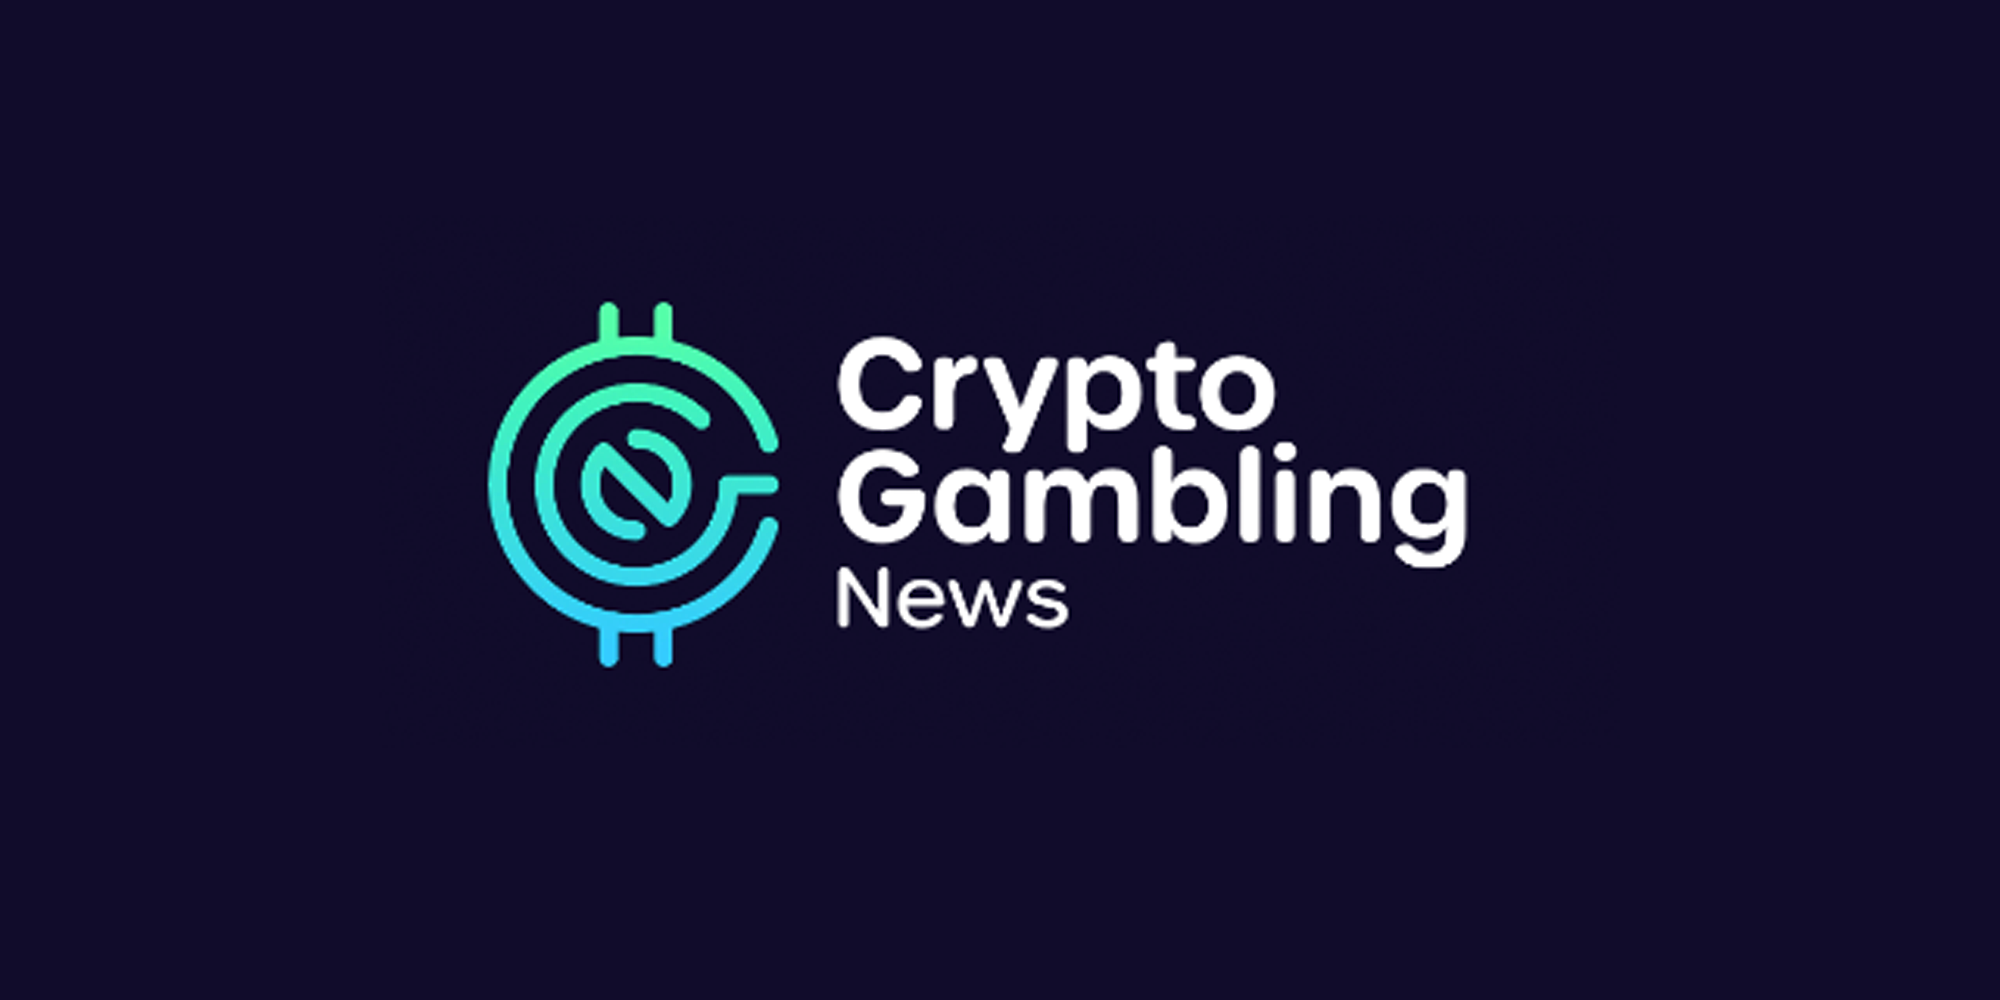 CryptoGamblingNews.com